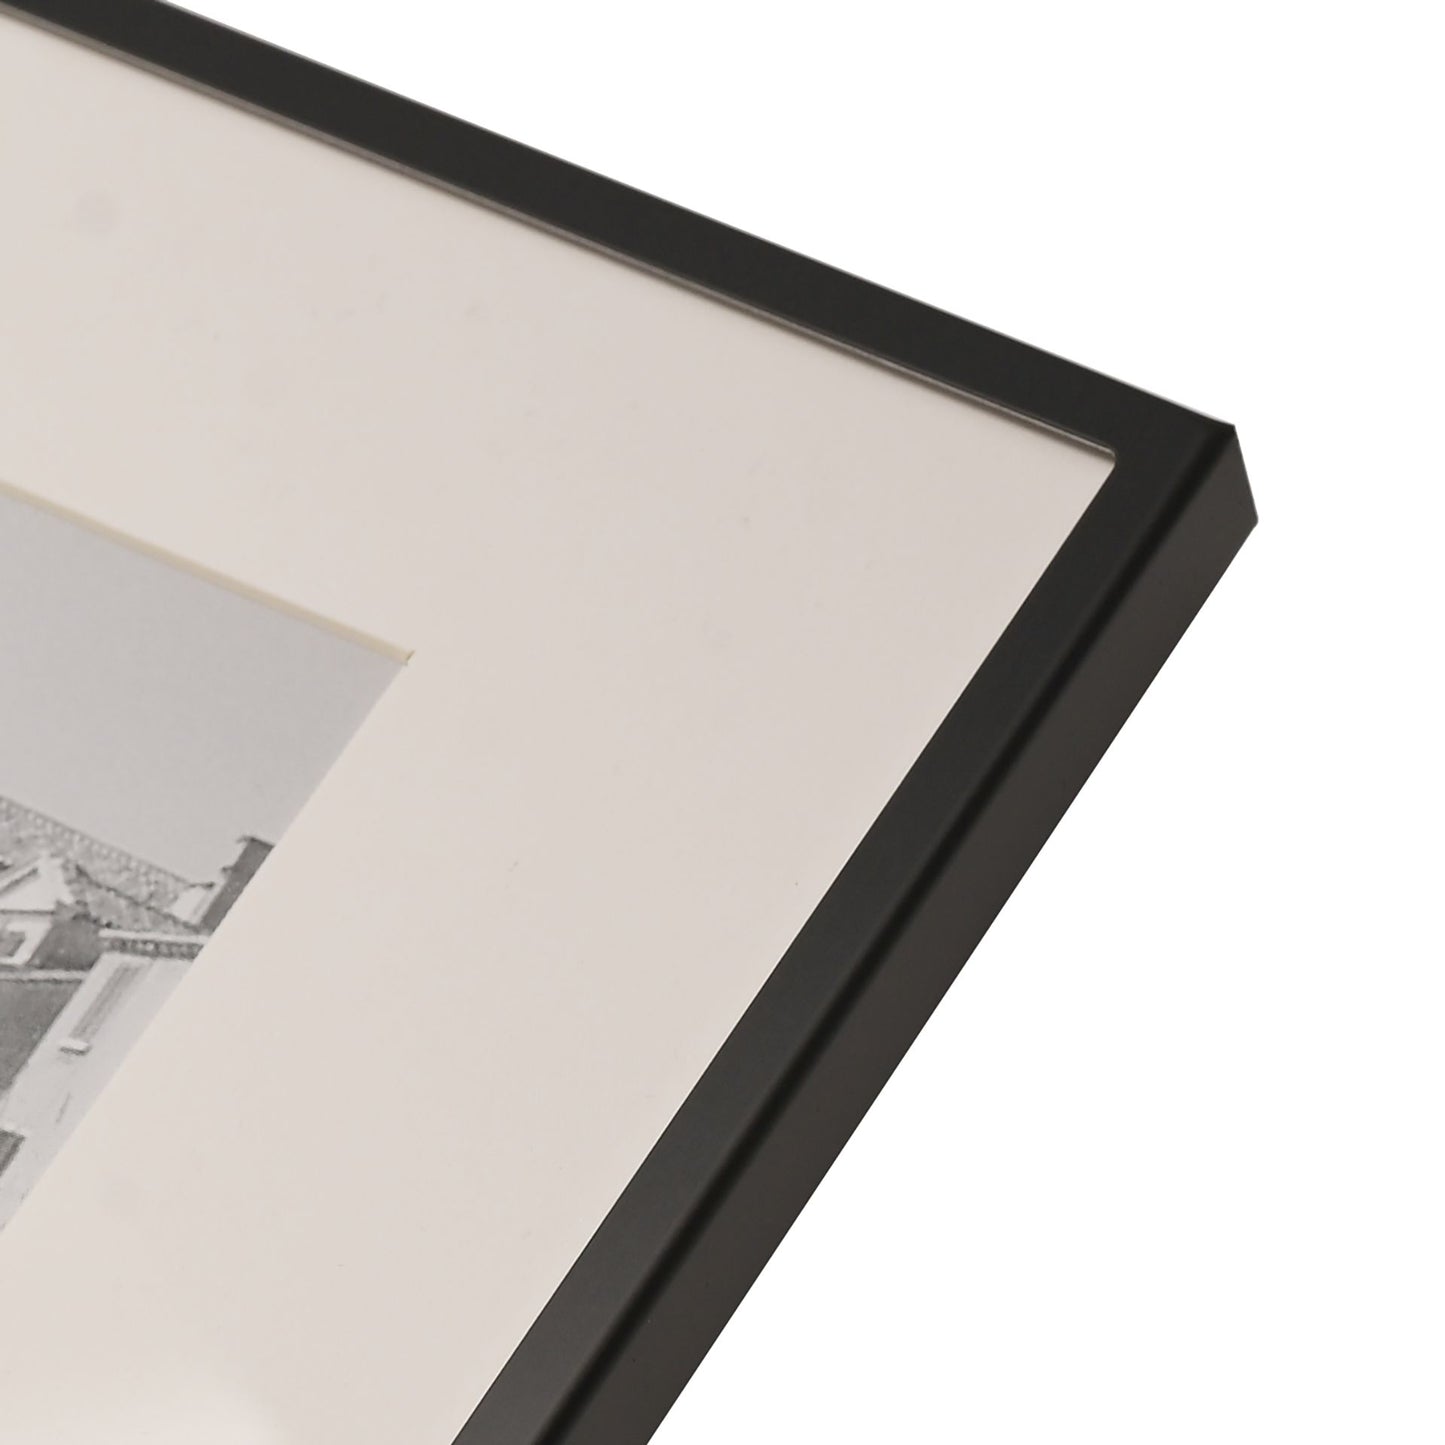 Impressions Matt Black Photo Frame | Internal Crisp White Mount | 5x7 inch